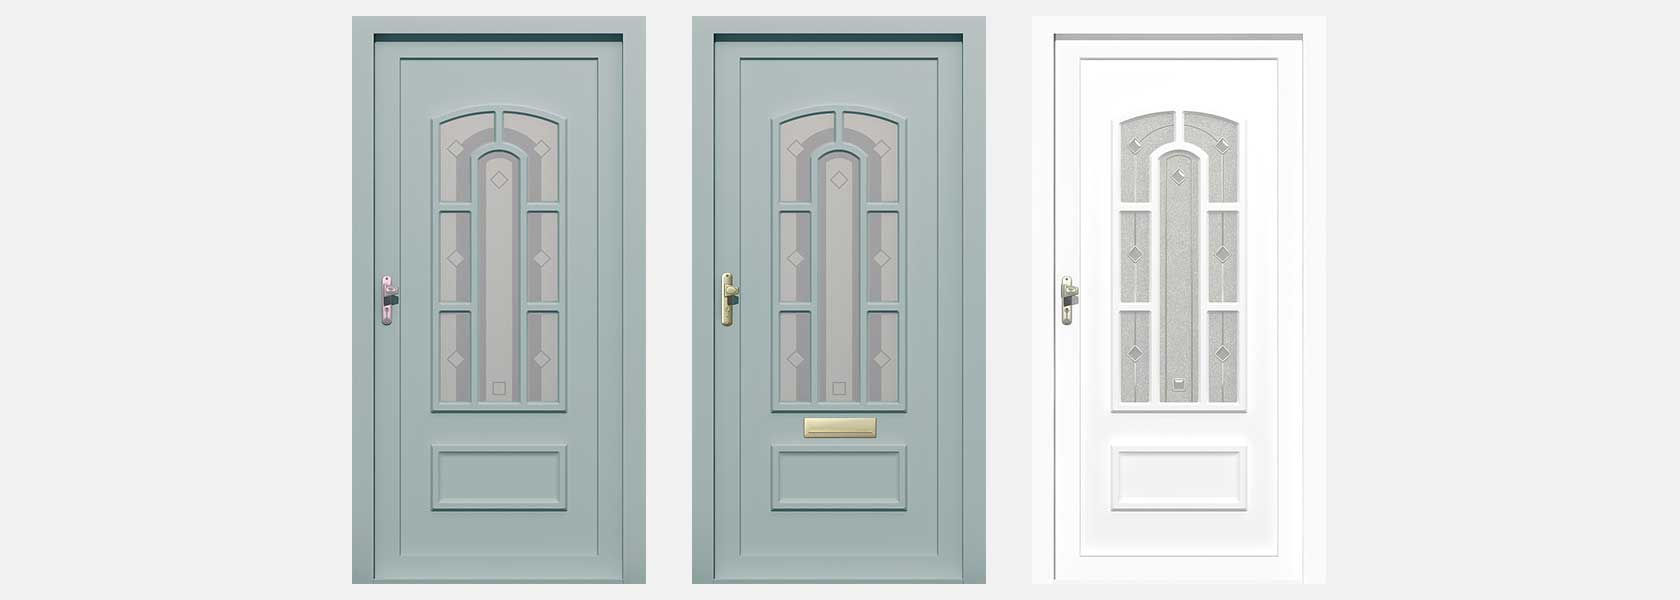 HPL front doors, front doors, HPL doors, front doors panels